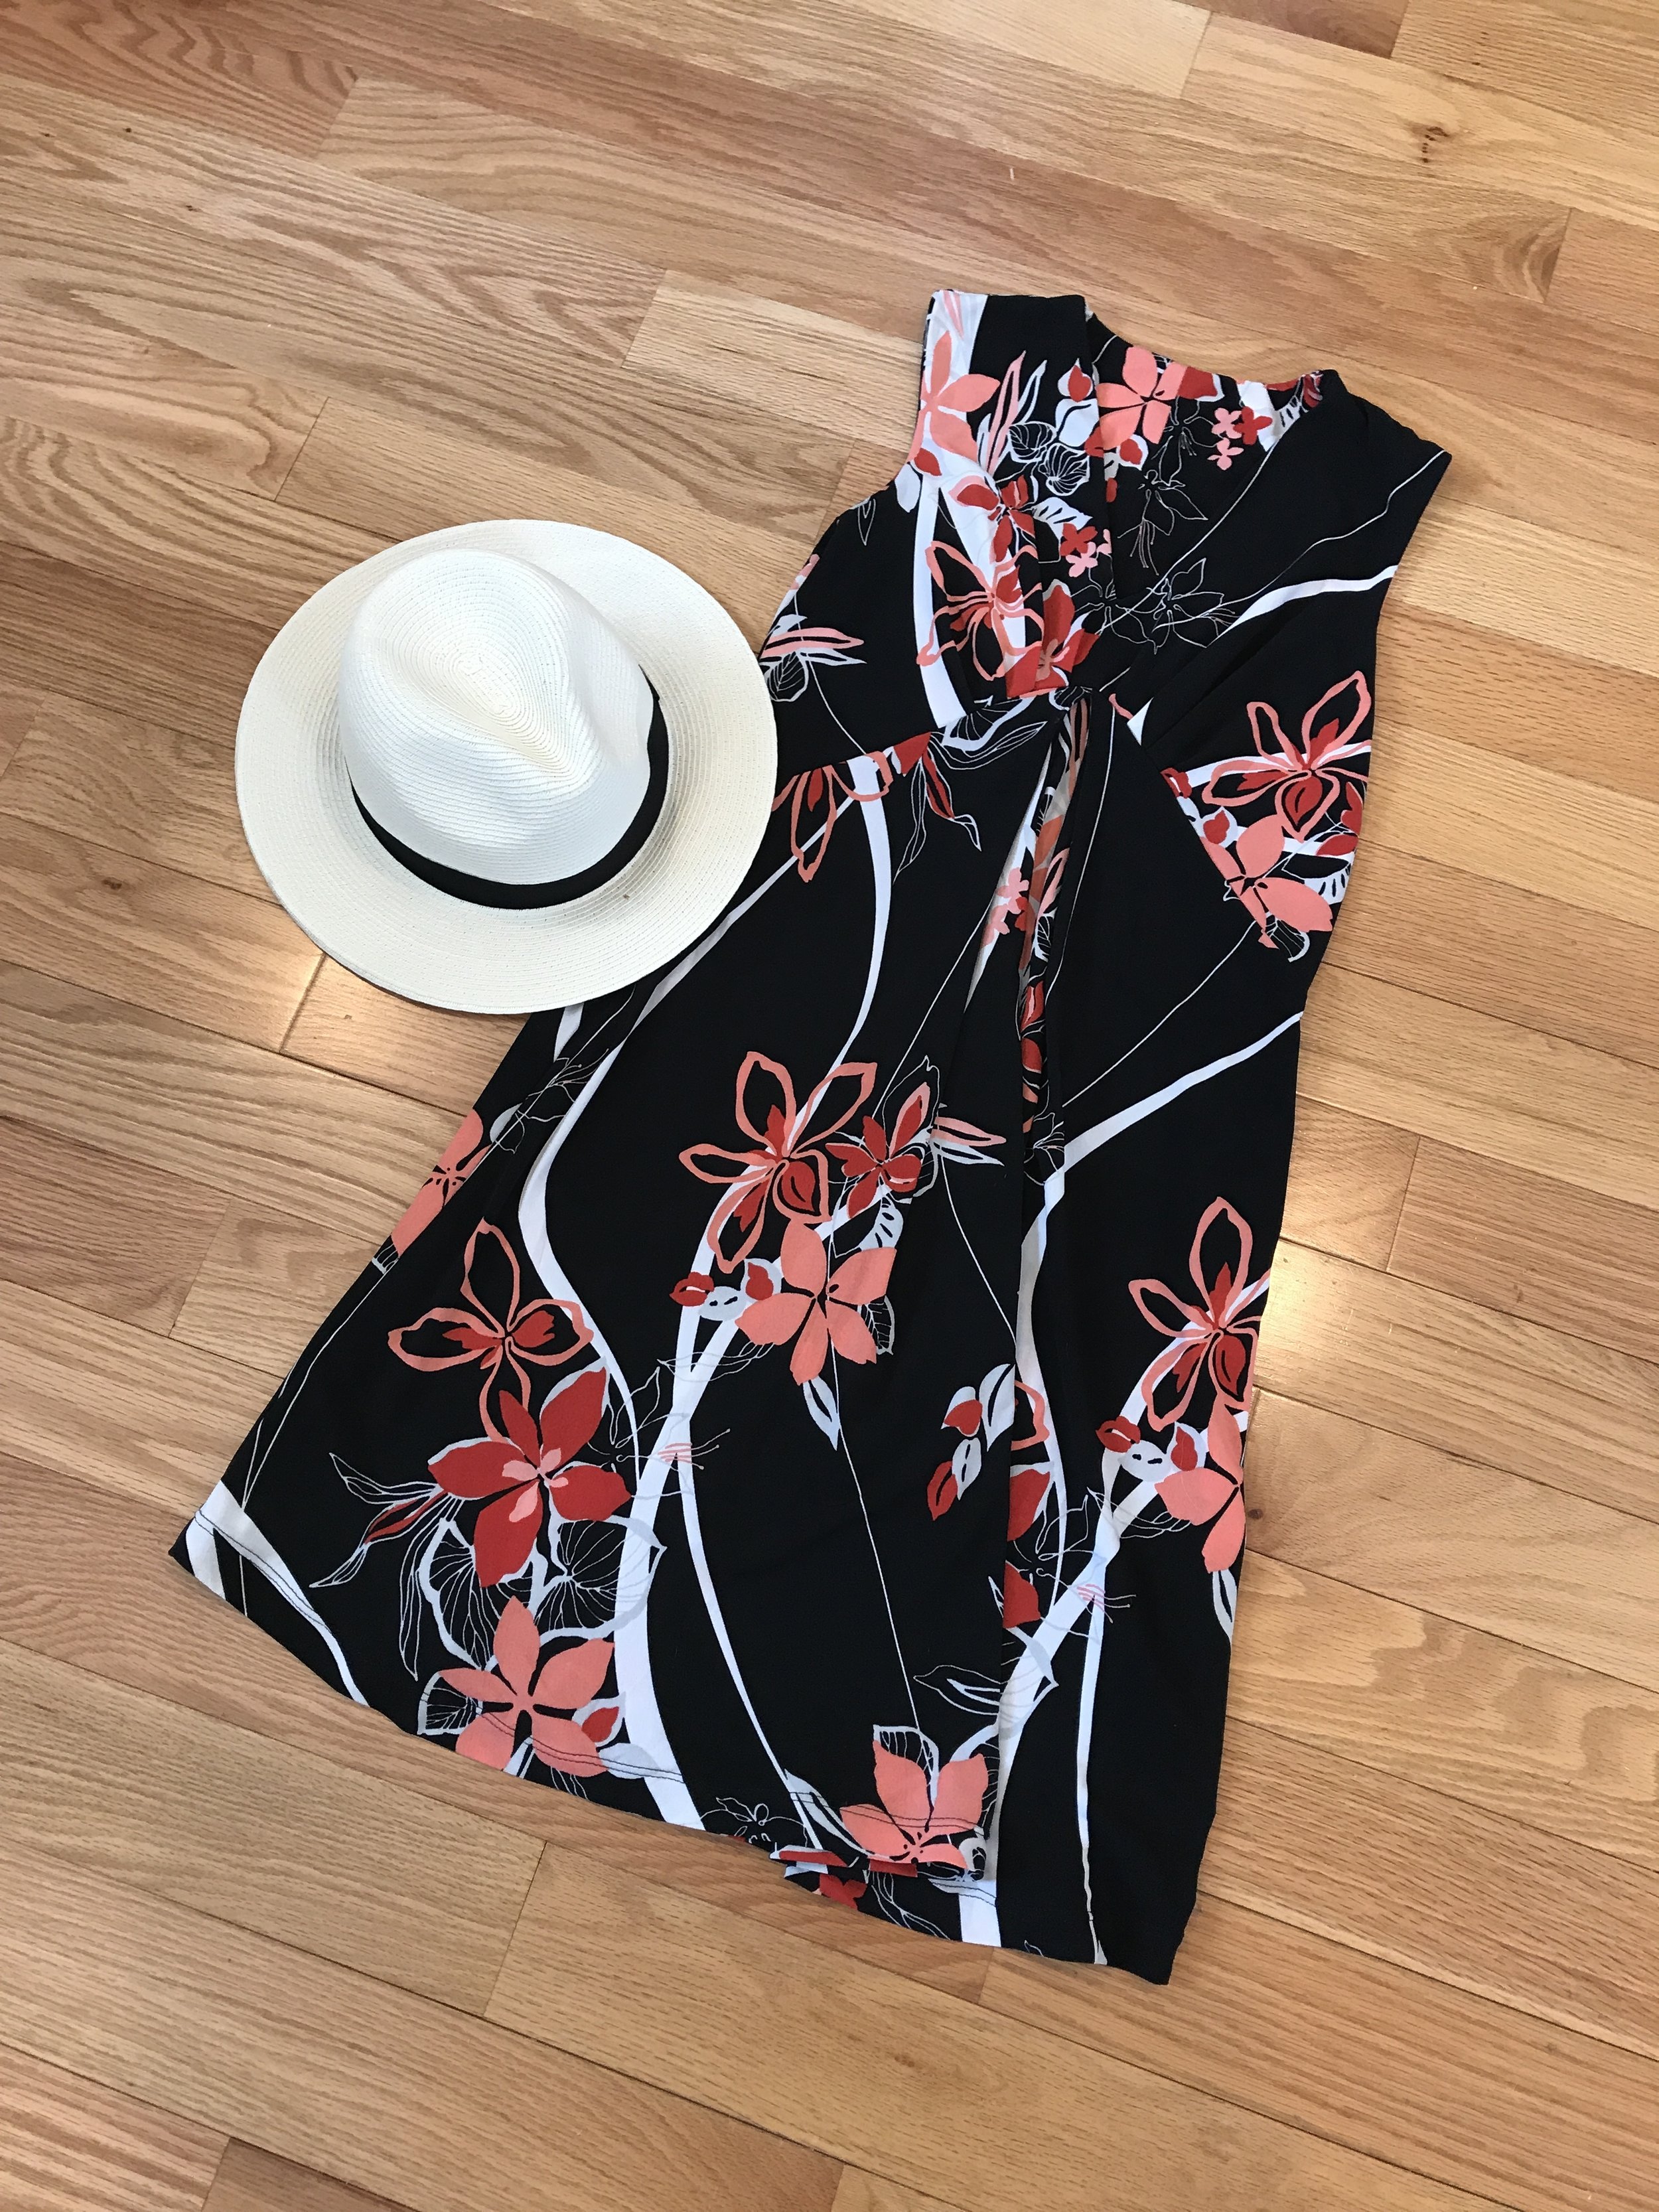 Sewing a Spring Break Capsule Wardrobe with Christine Jonson Patterns